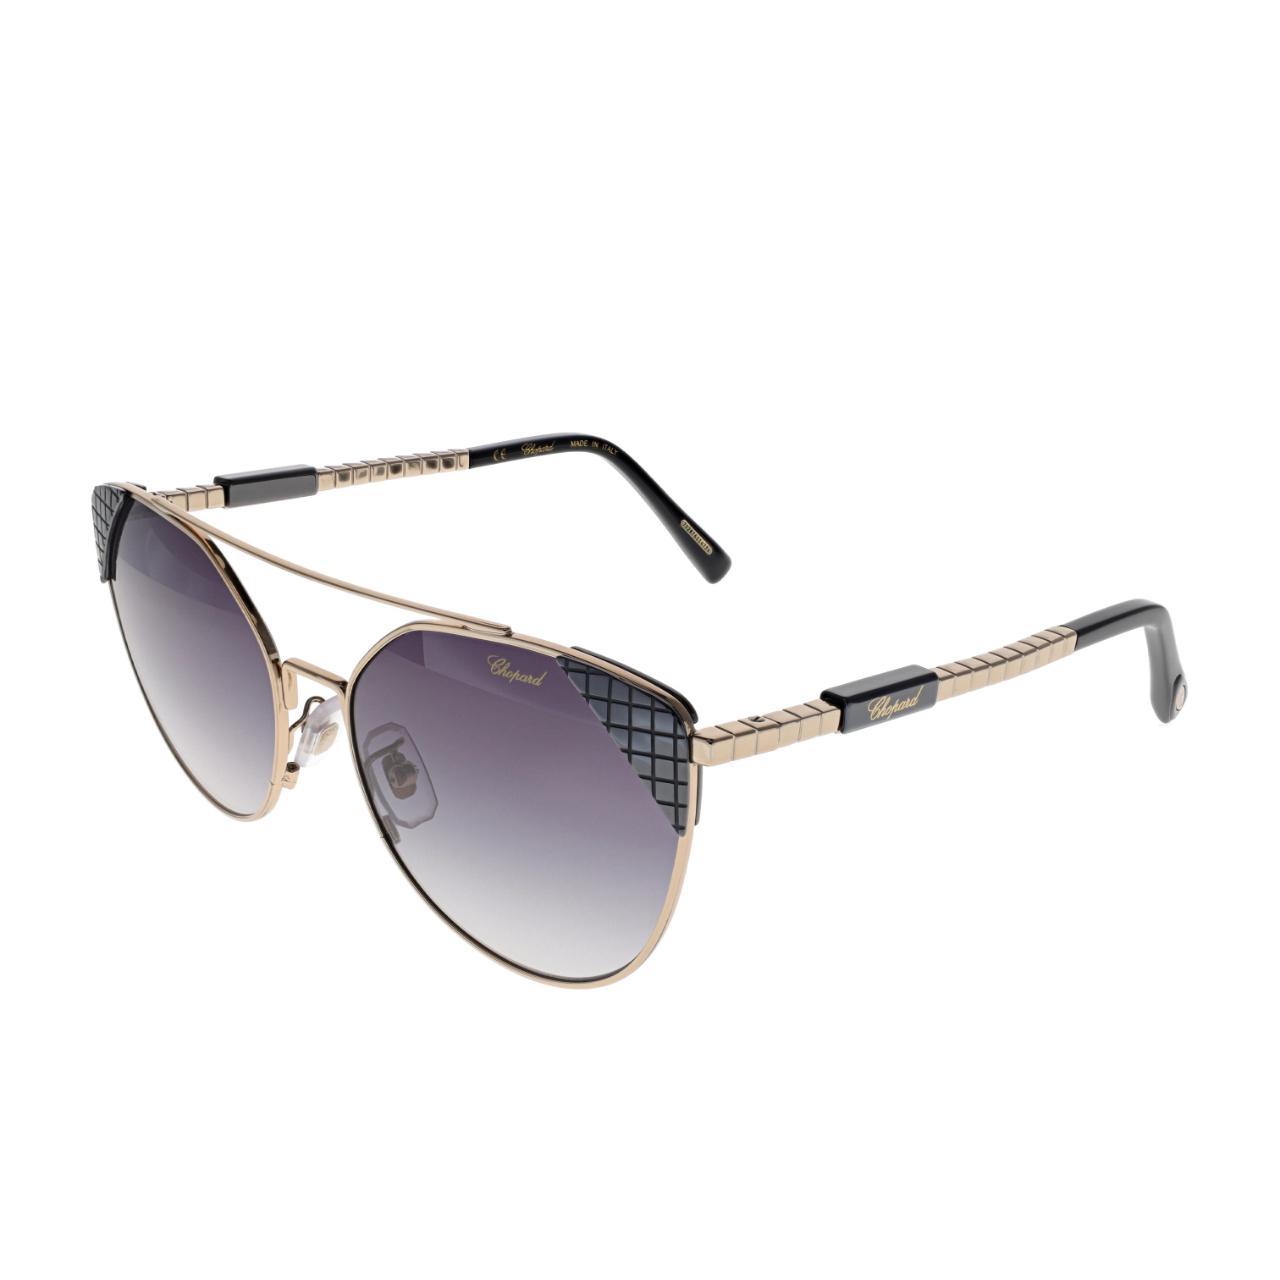 Chopard Women's Gold and Black Sunglasses